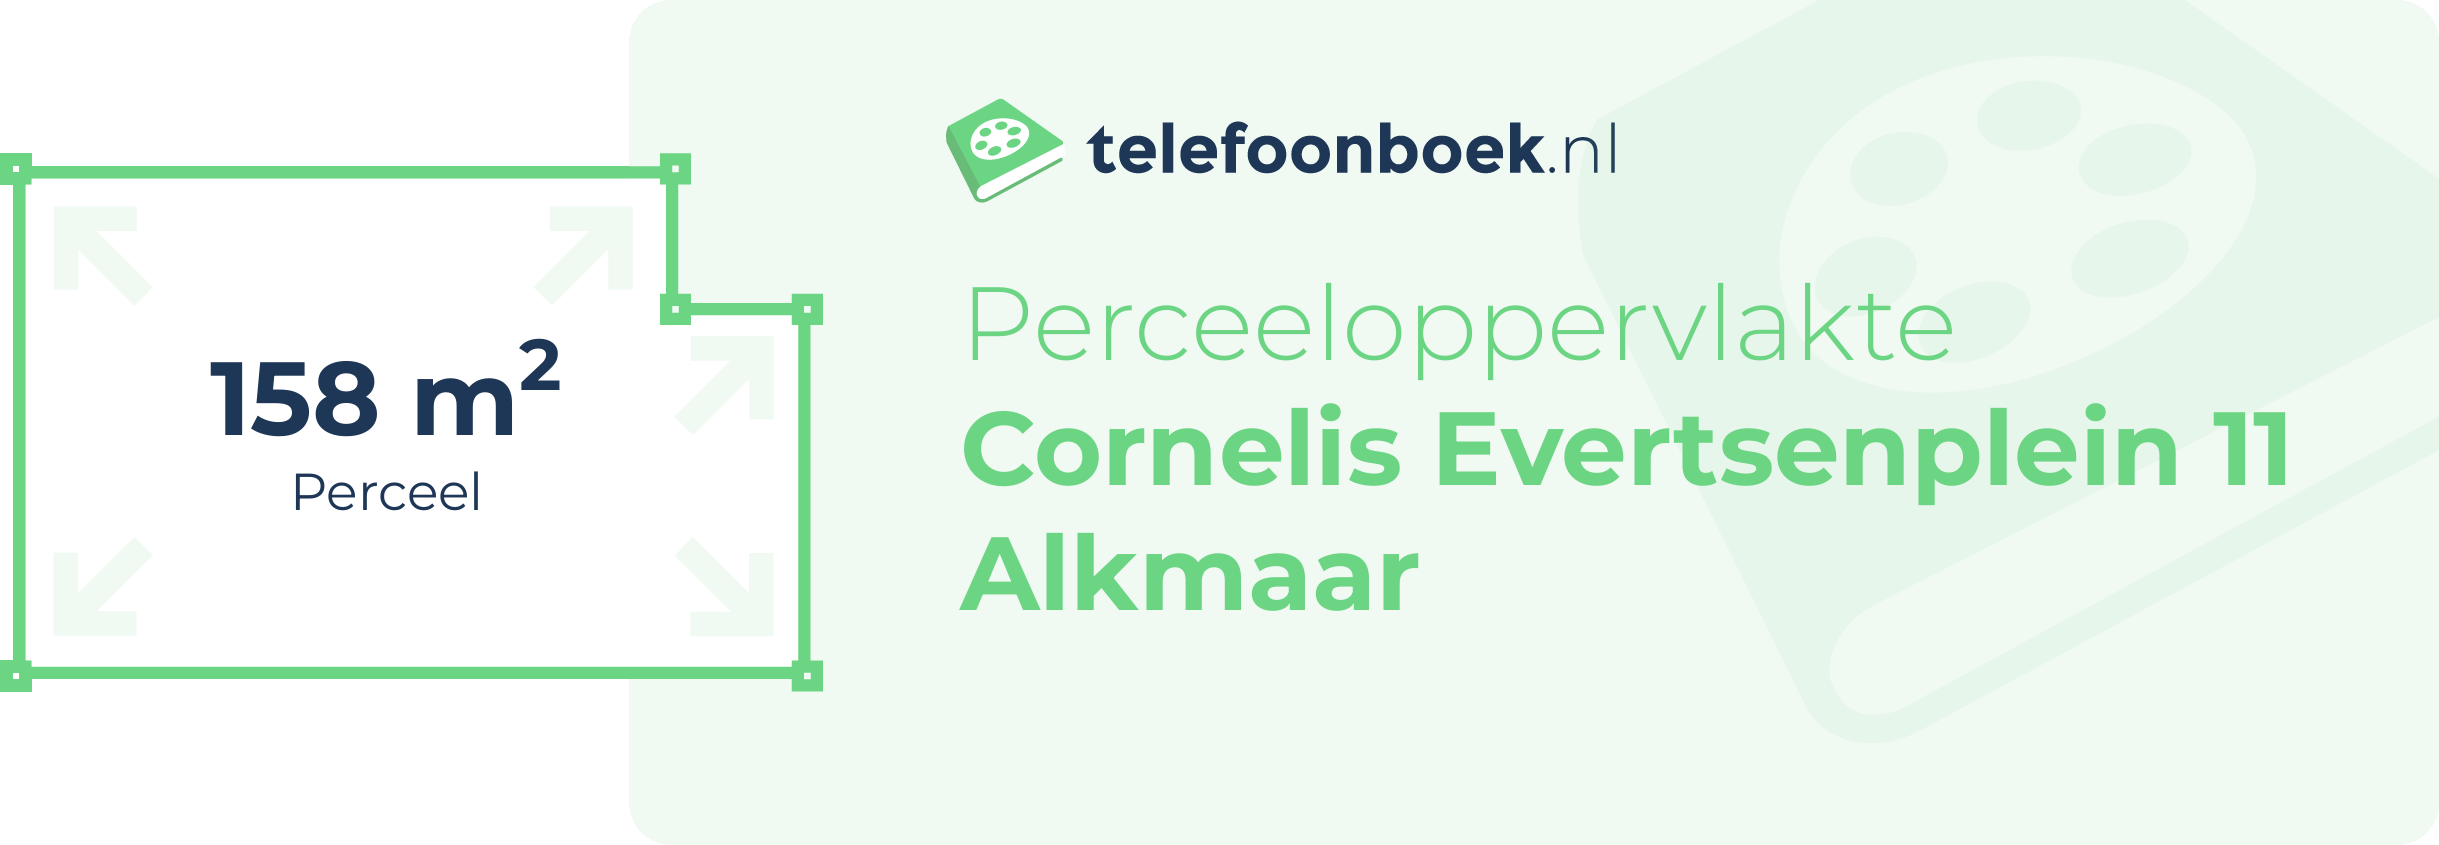 Perceeloppervlakte Cornelis Evertsenplein 11 Alkmaar